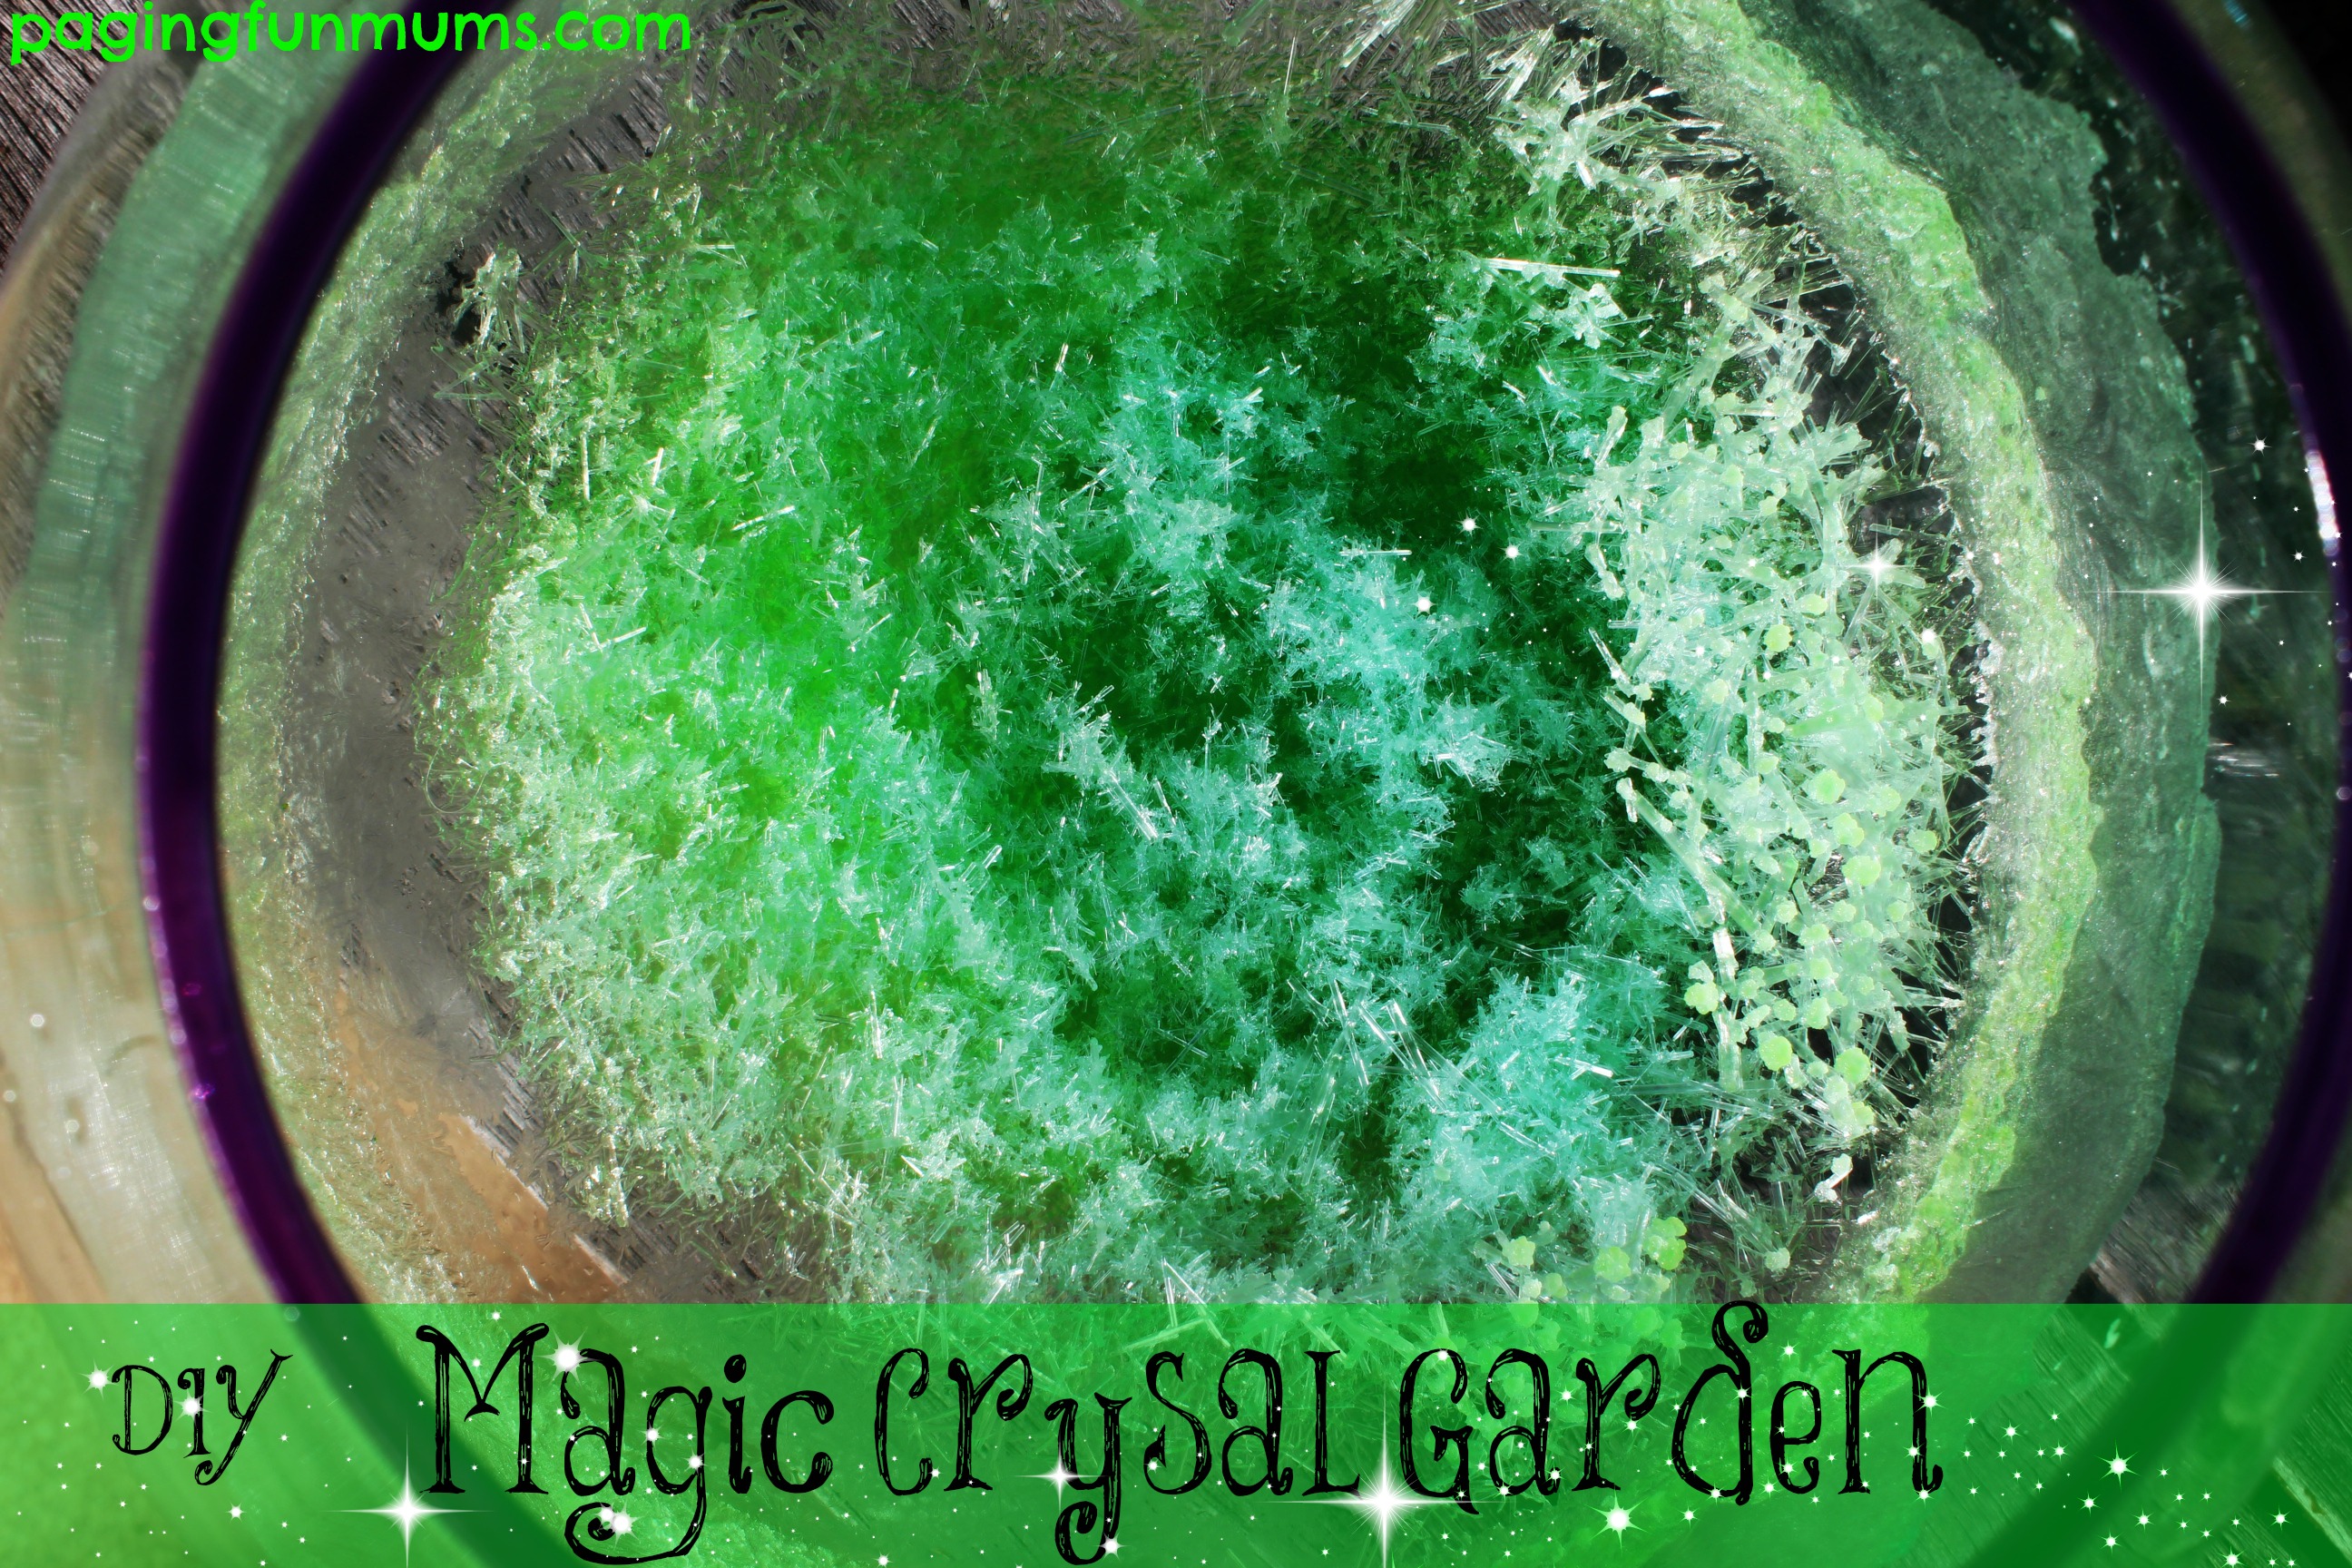 Diy Magic Crystal Garden